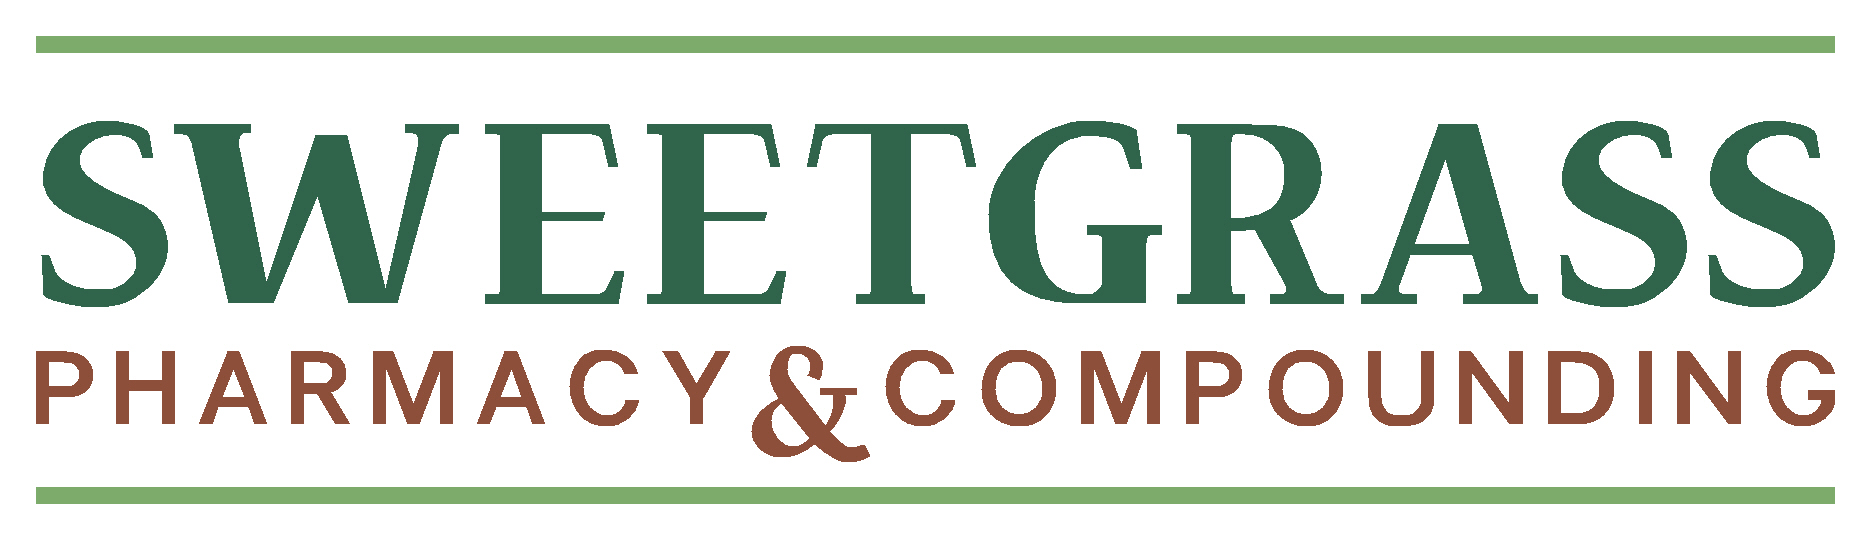 Sweetgrass Pharmacy & Compounding